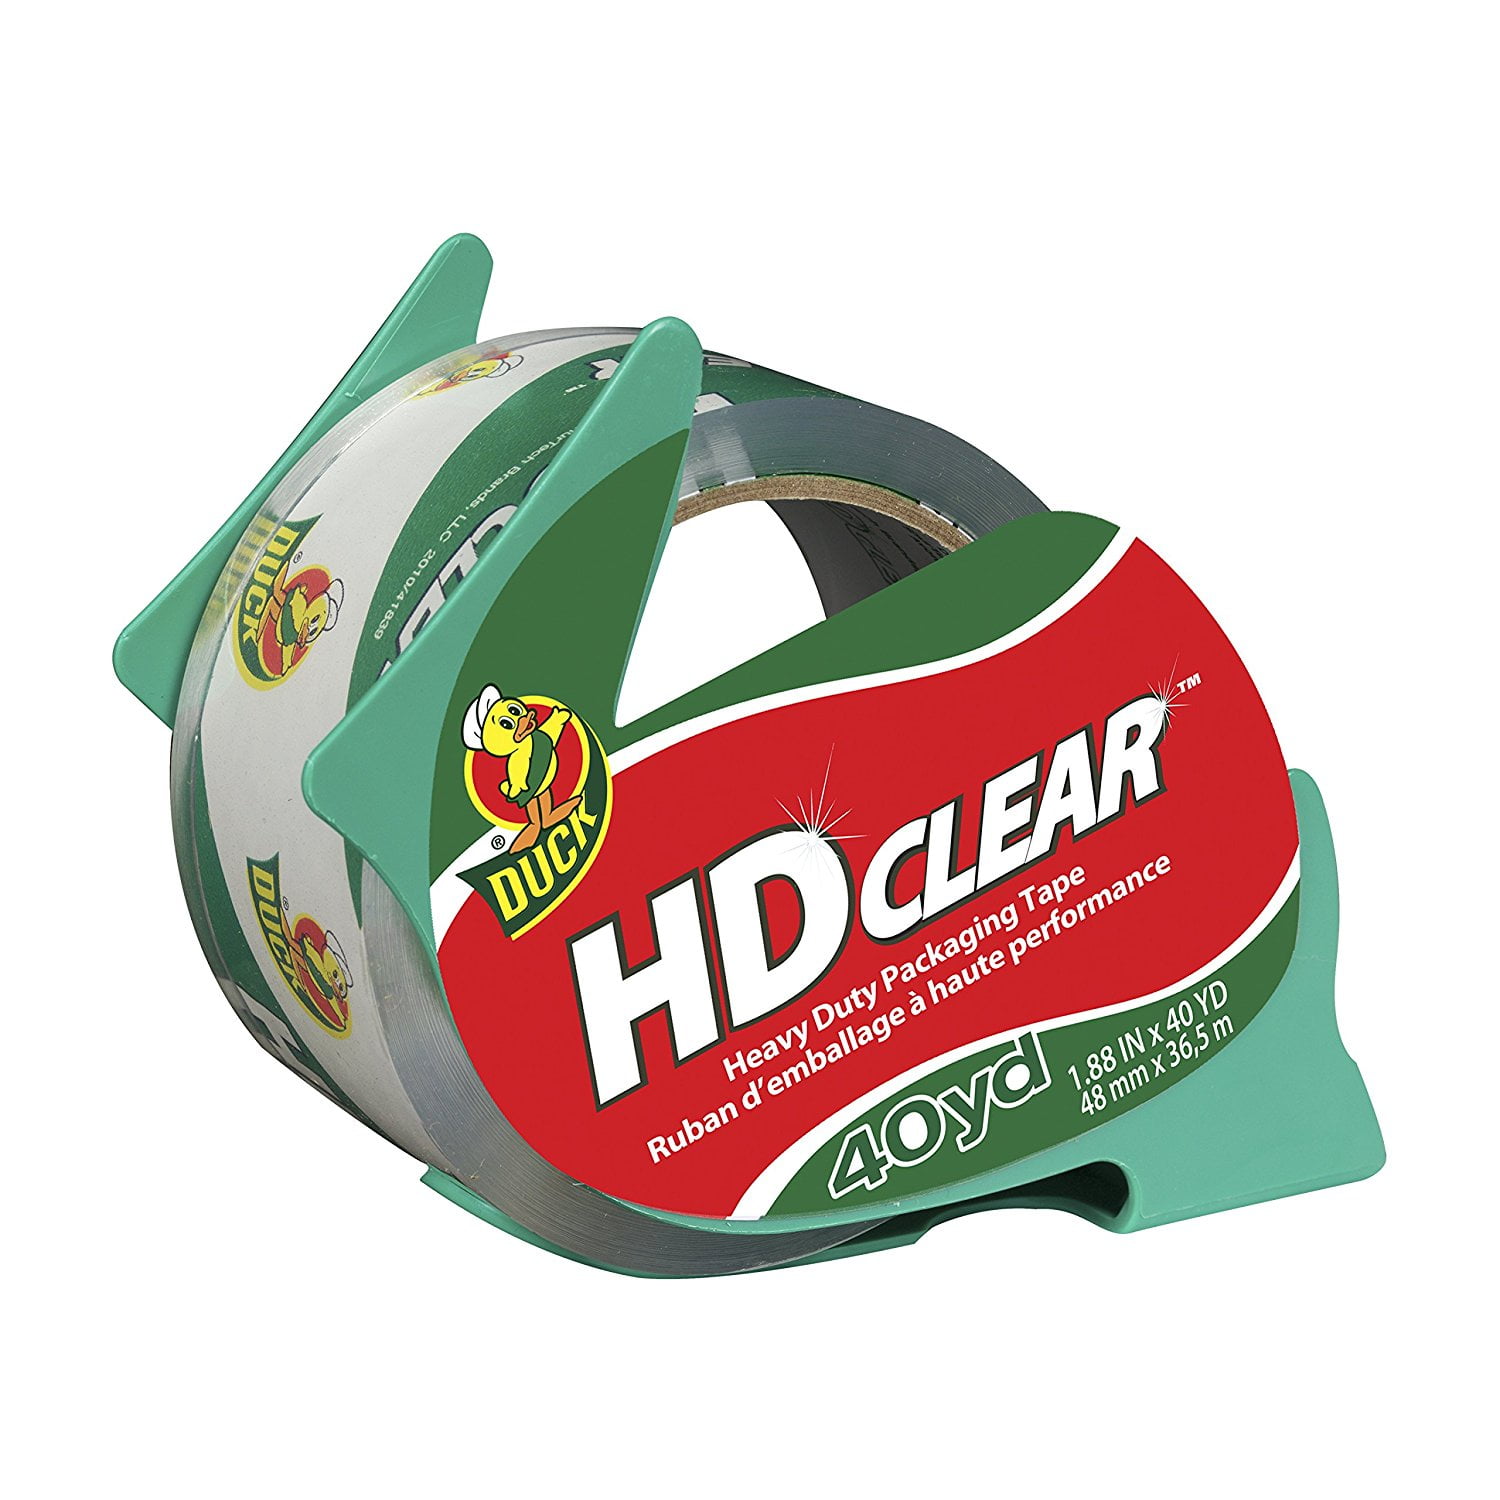 Duck Brand HD Clear Heavy Duty Acrylic Packing Tape - Clear, 1.88 in. x 40 yd.